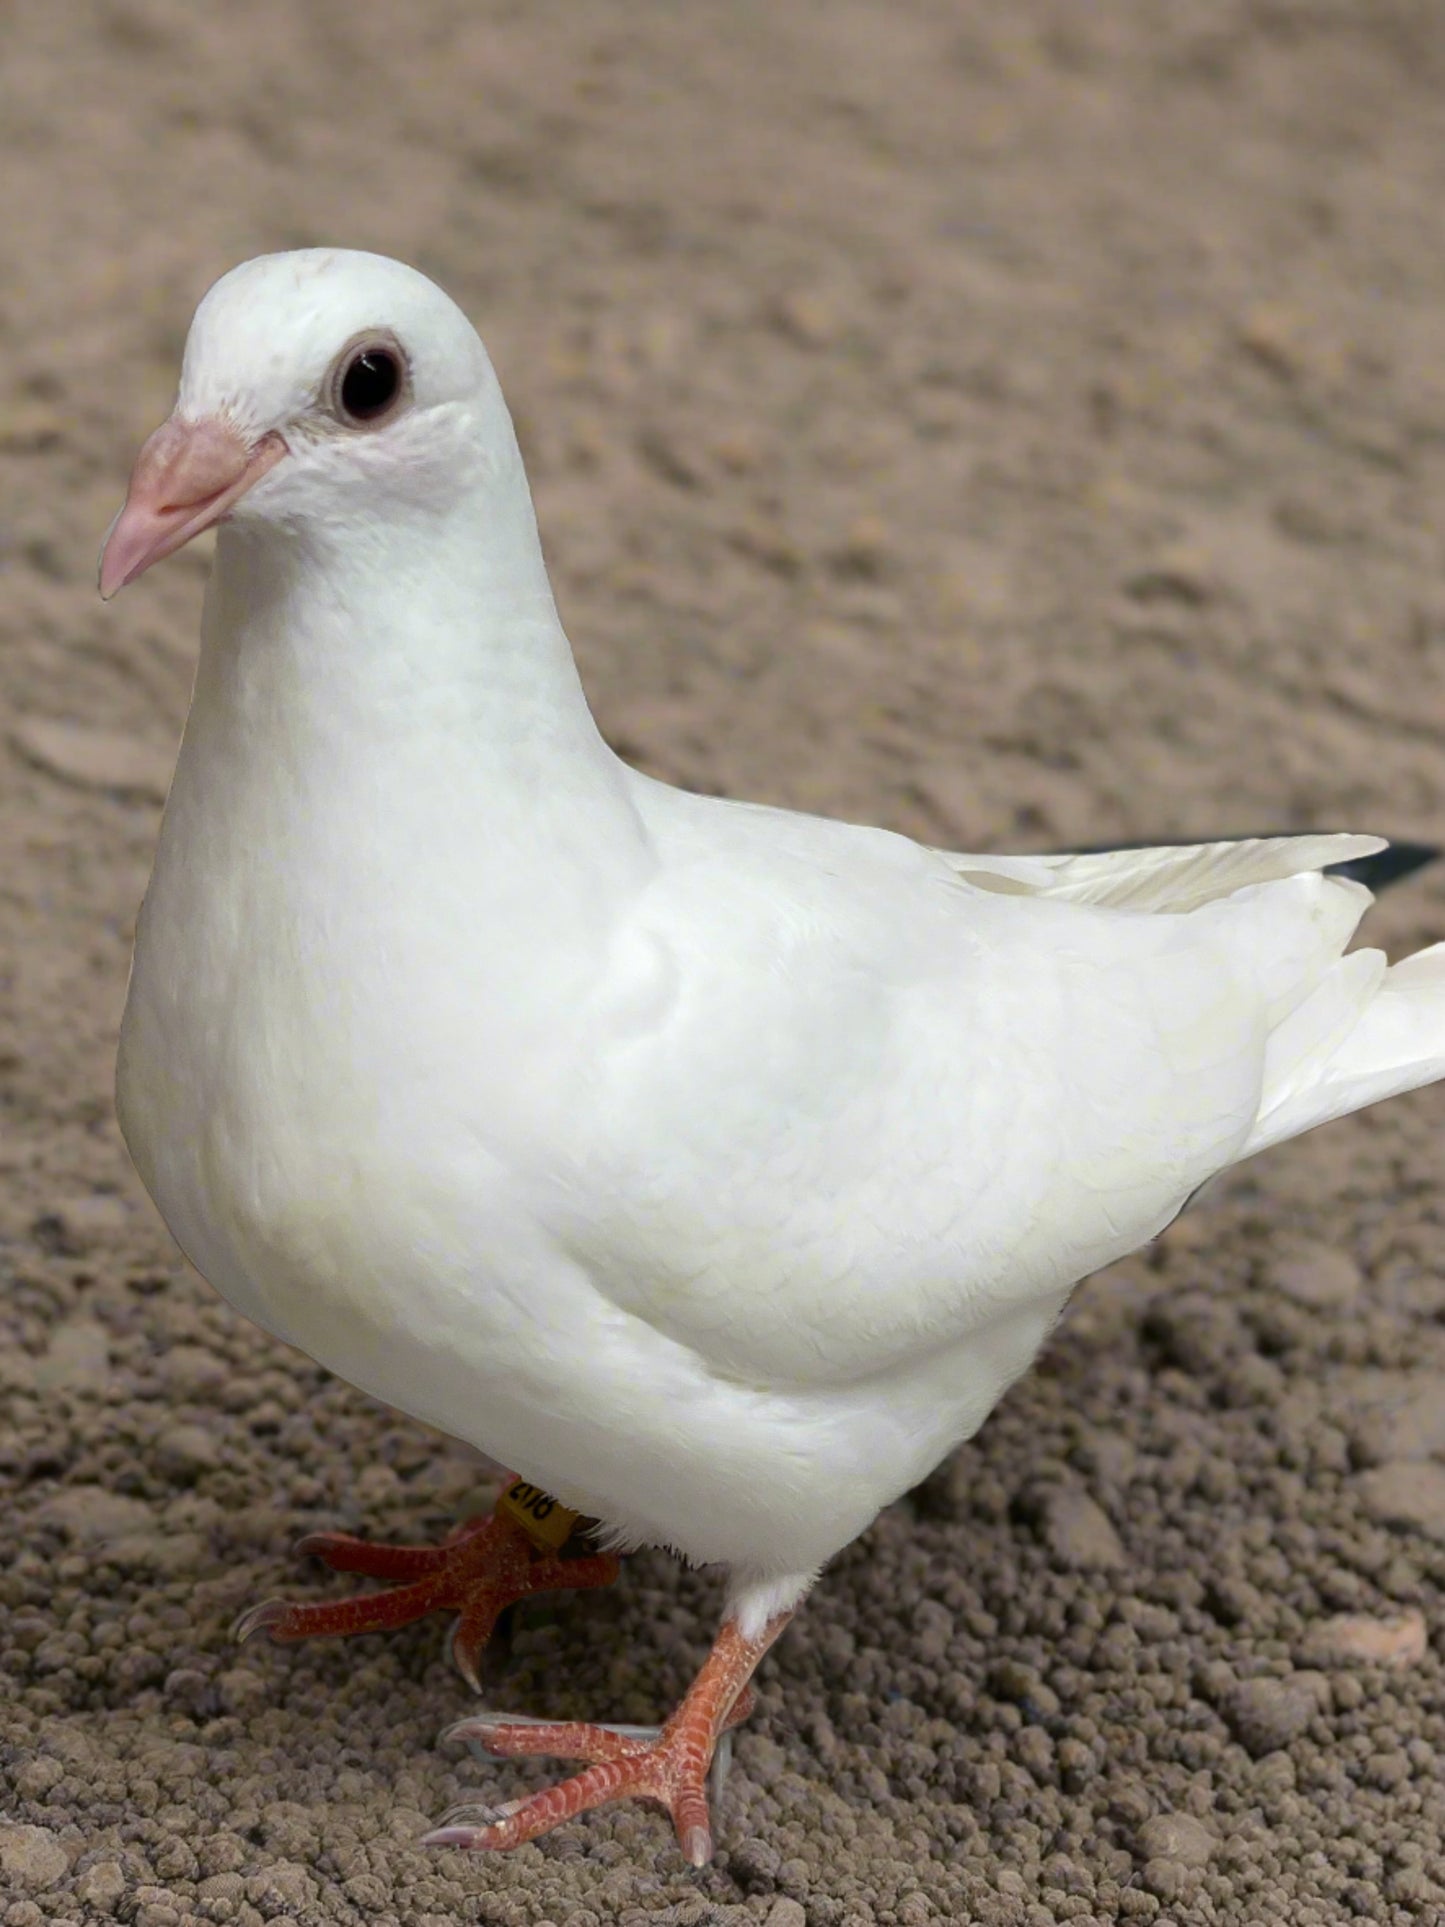 2024 Rocky Ridge White Pigeon "208”